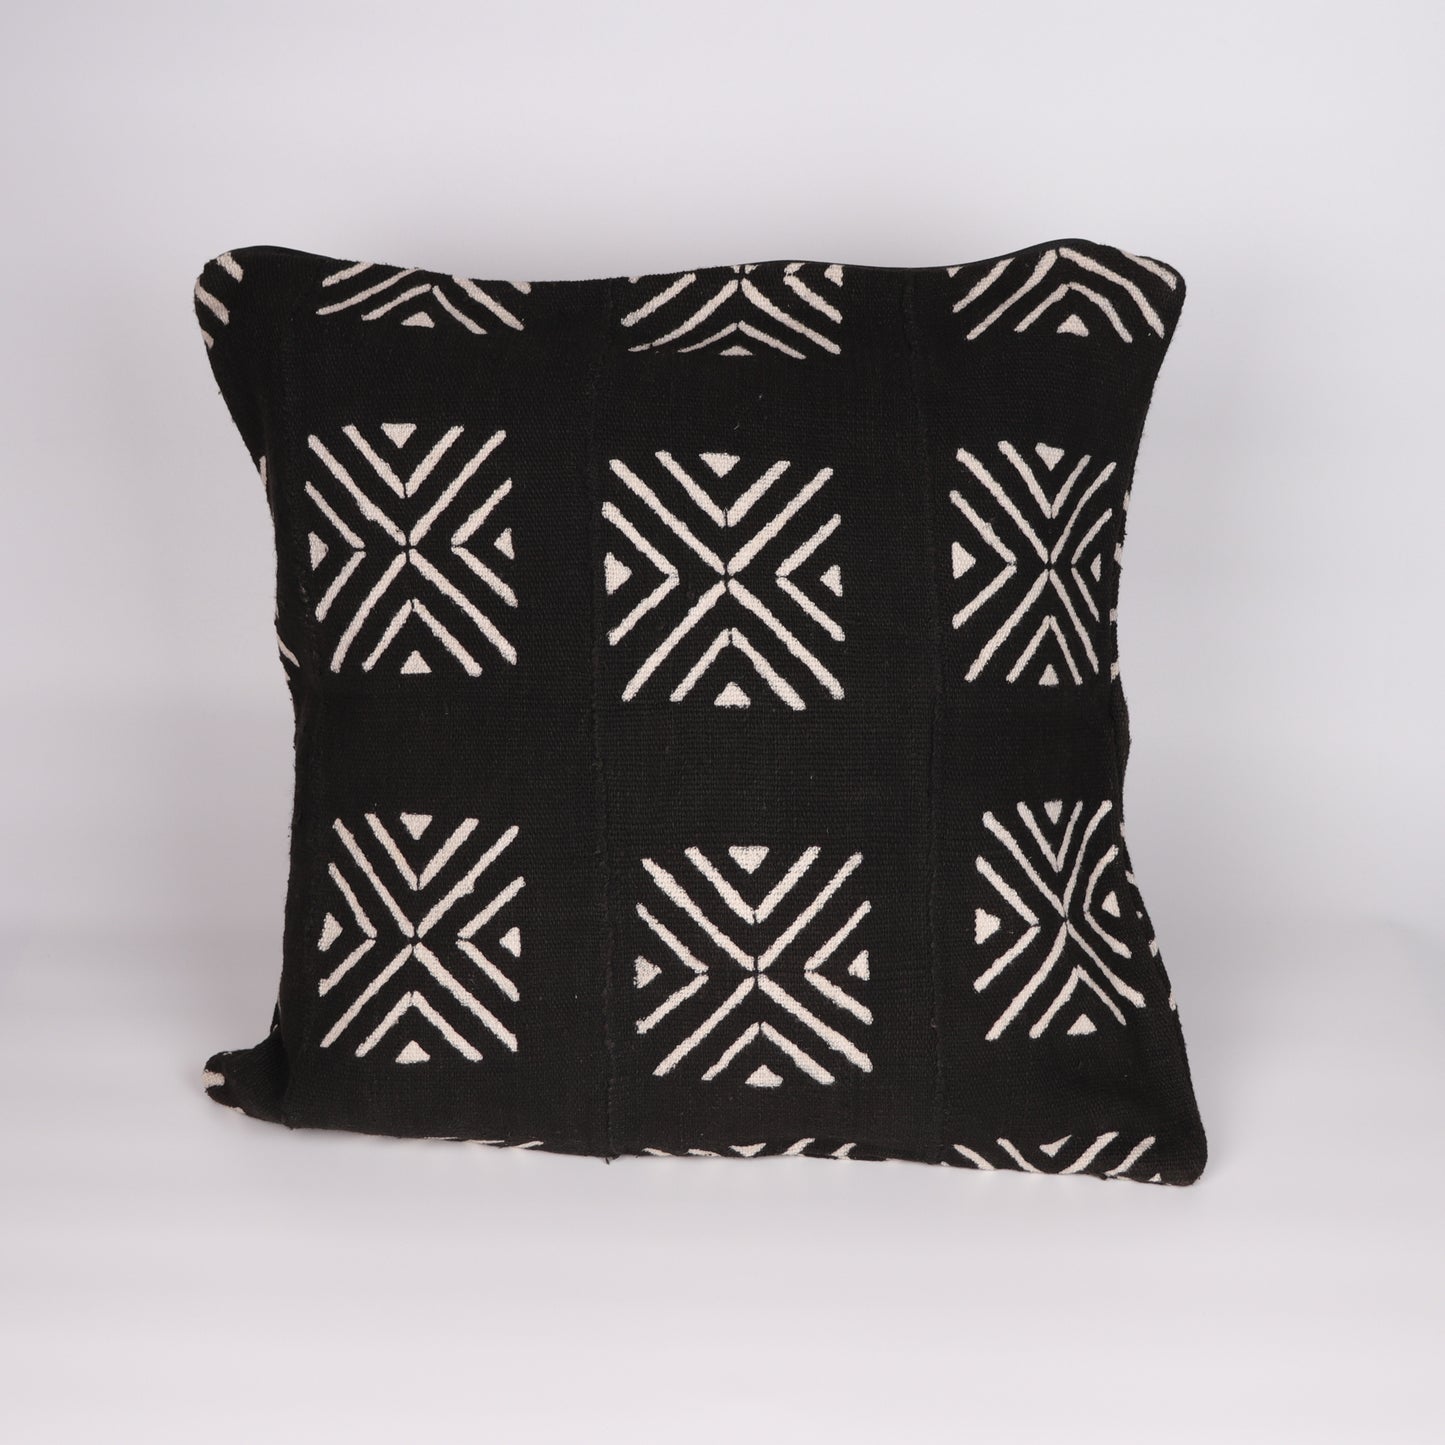 Black bogolan cushion cover from Mali